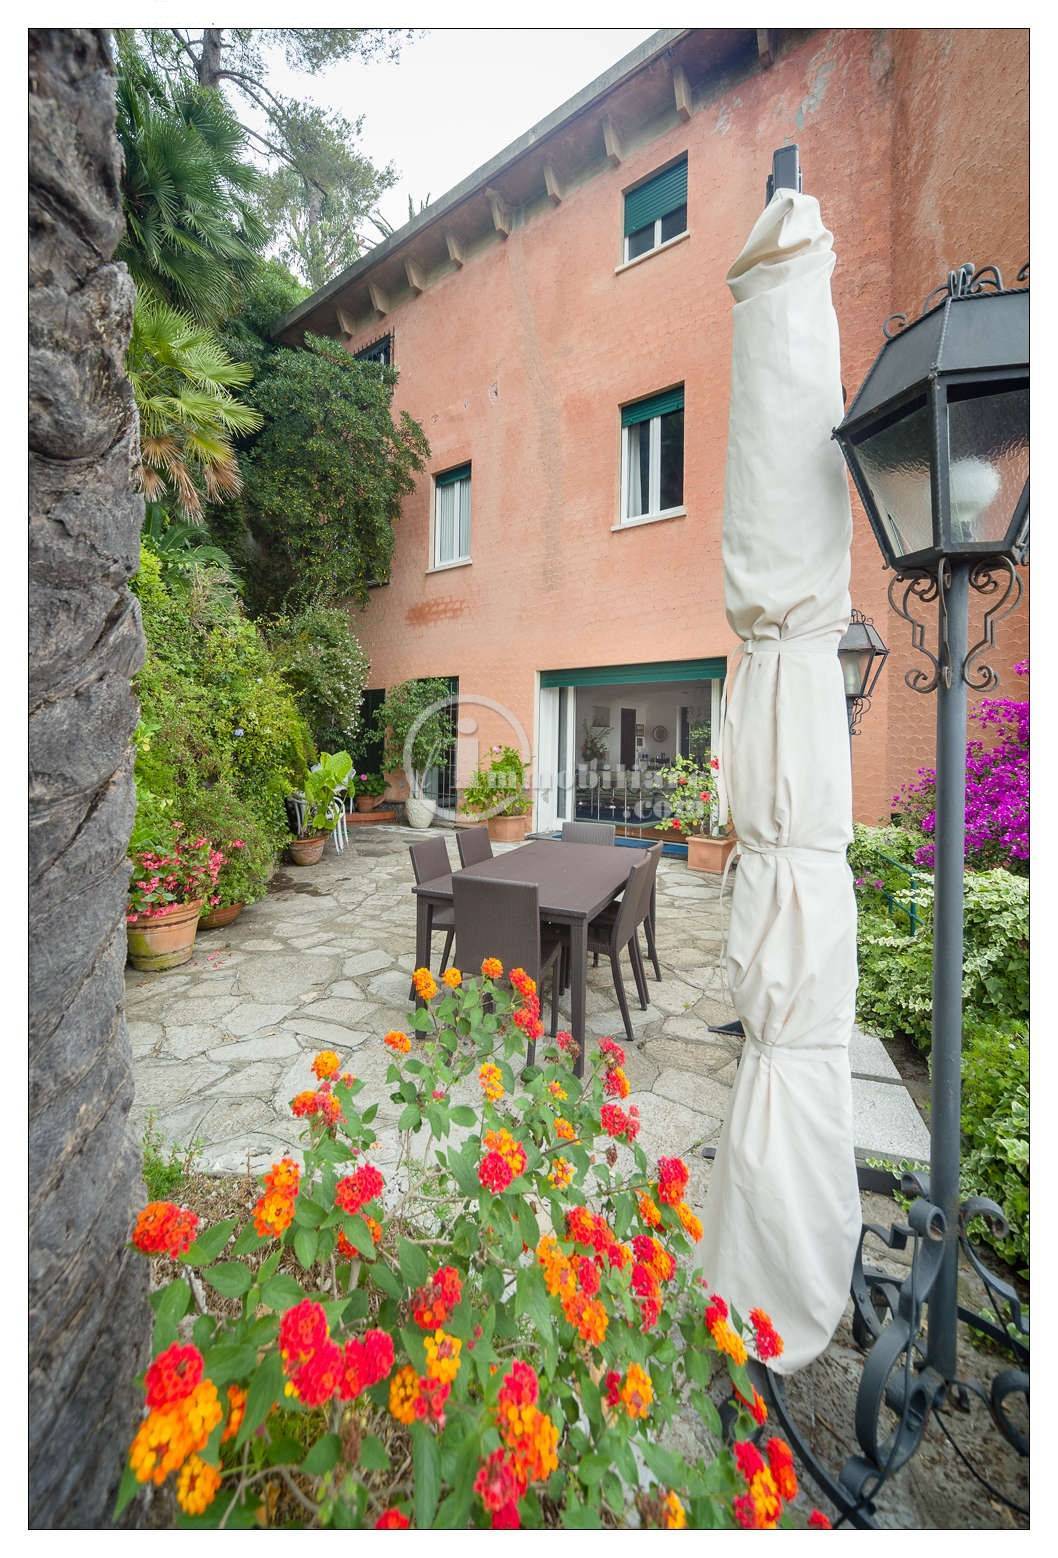 Villa in Vendita a Santa Margherita Ligure: 5 locali, 600 mq - Foto 4